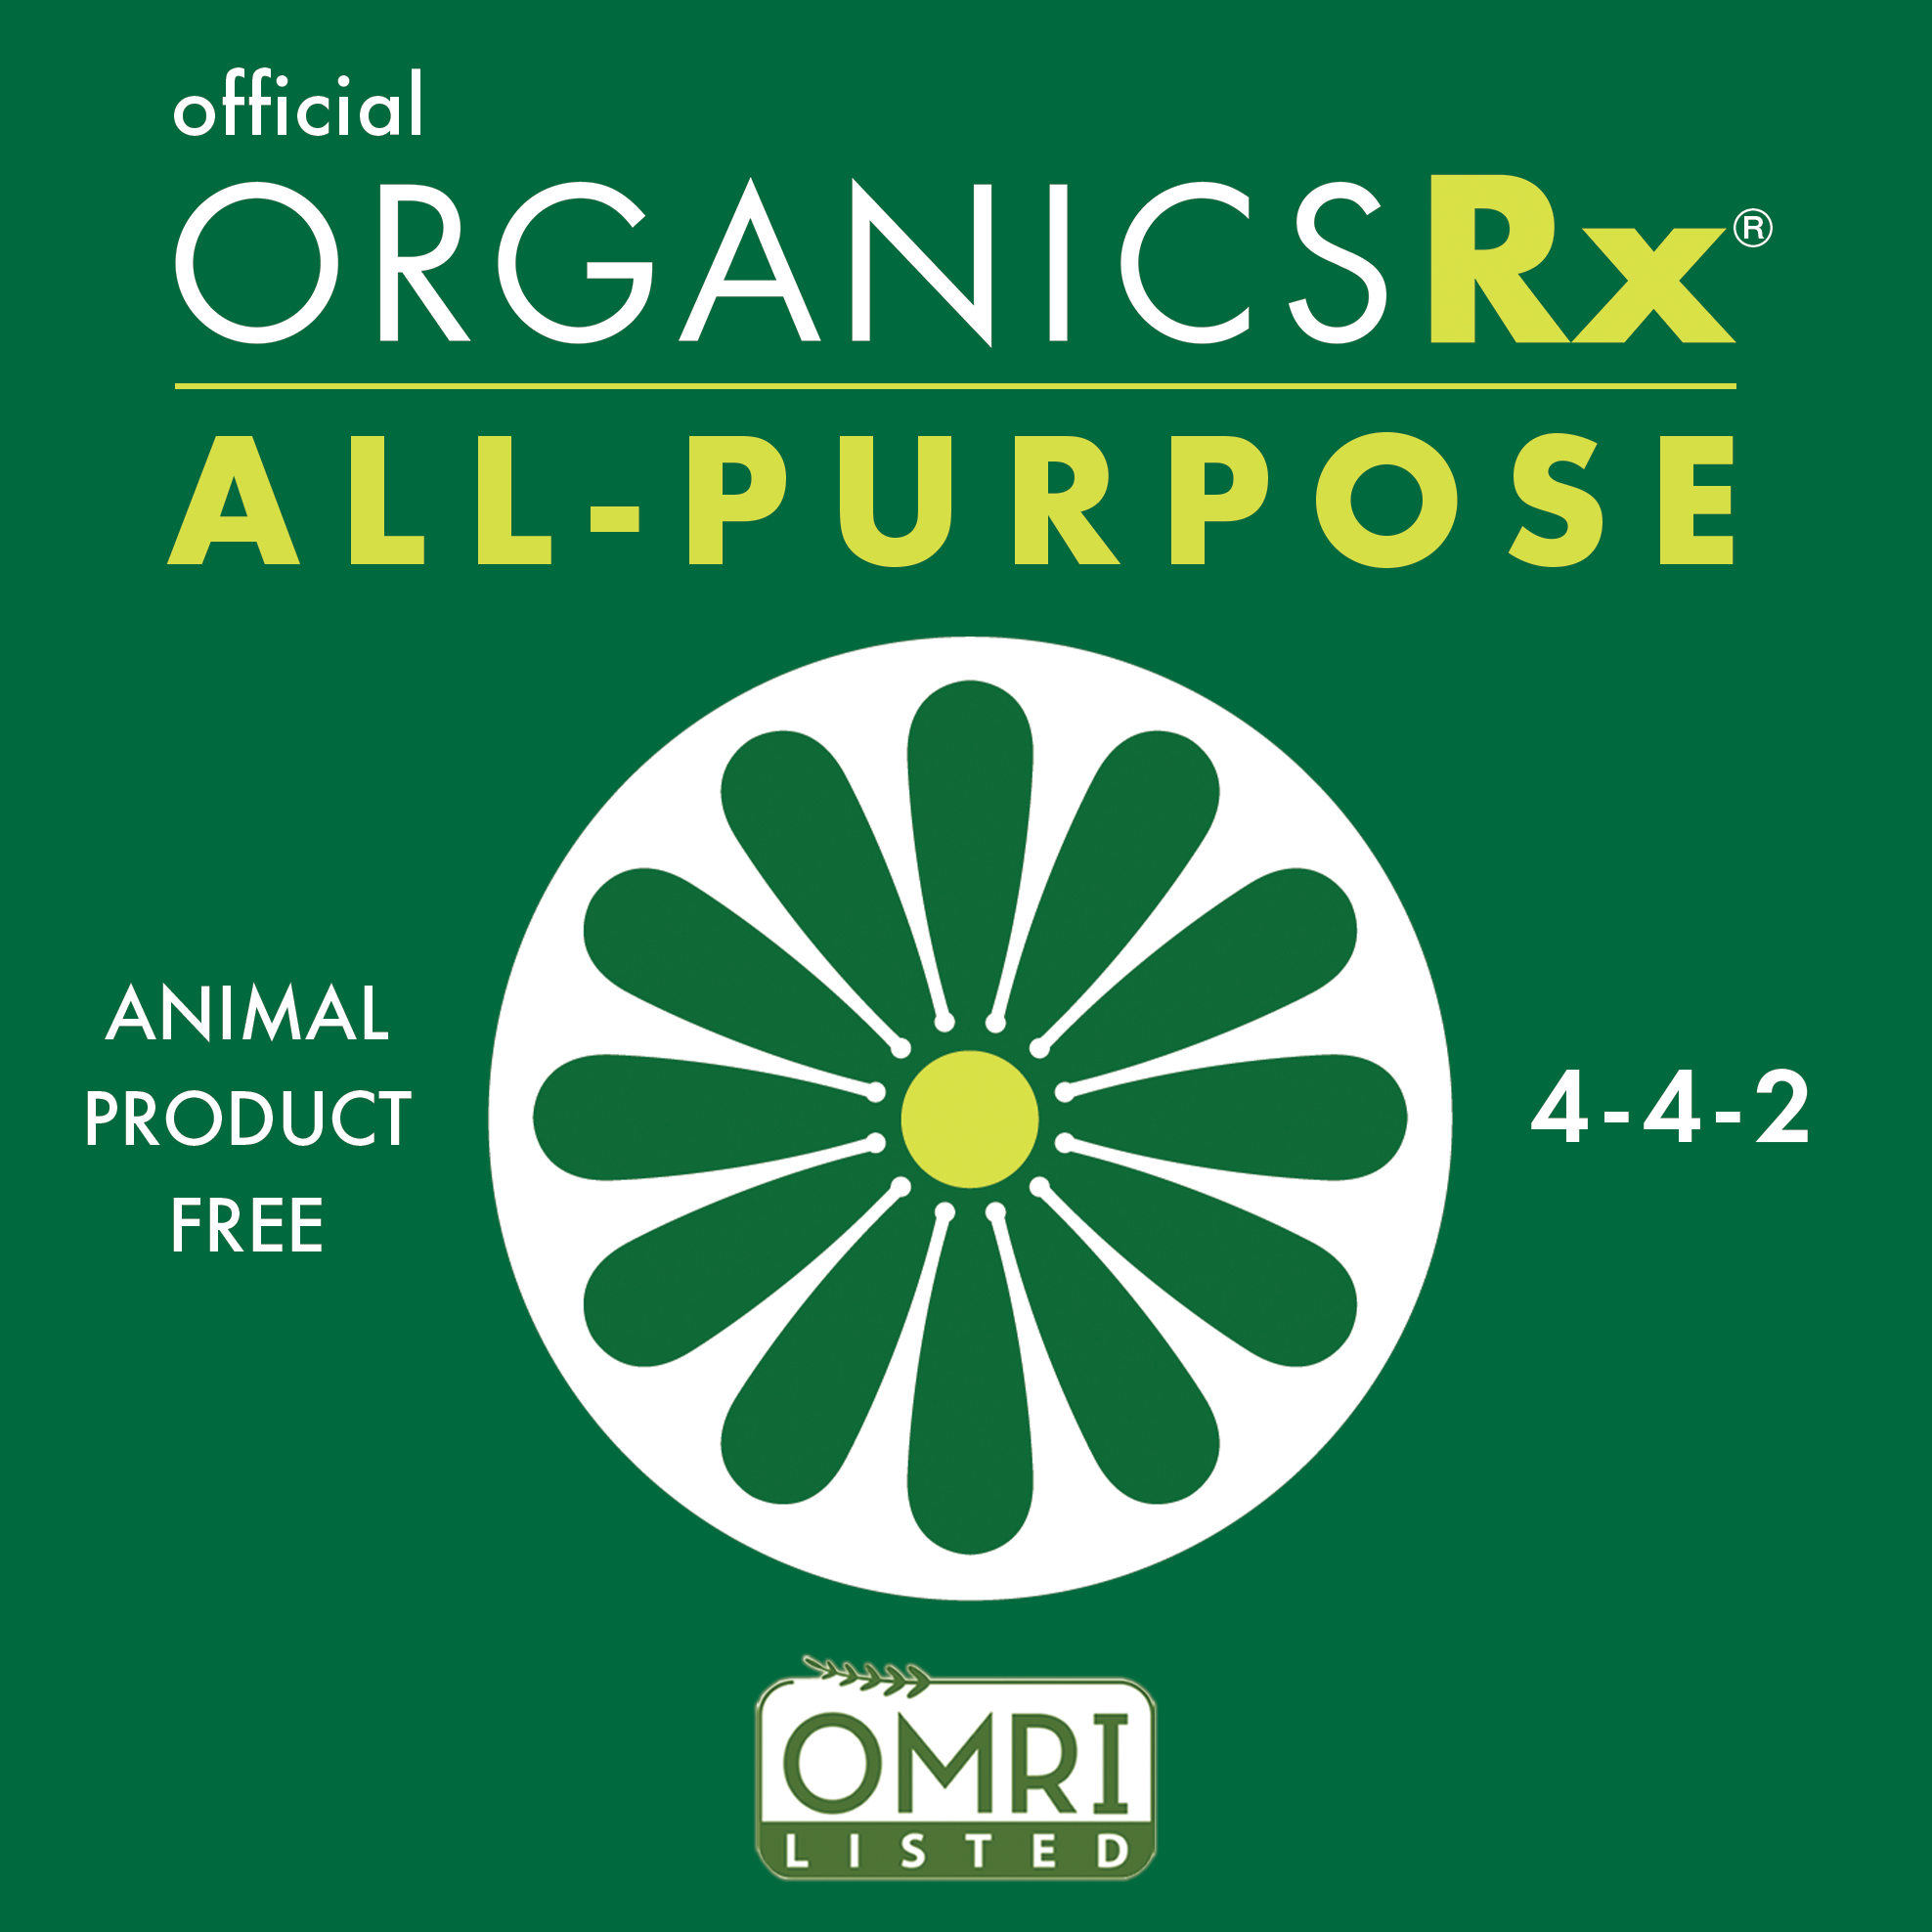 OrganicsRx All Purpose Plant Food